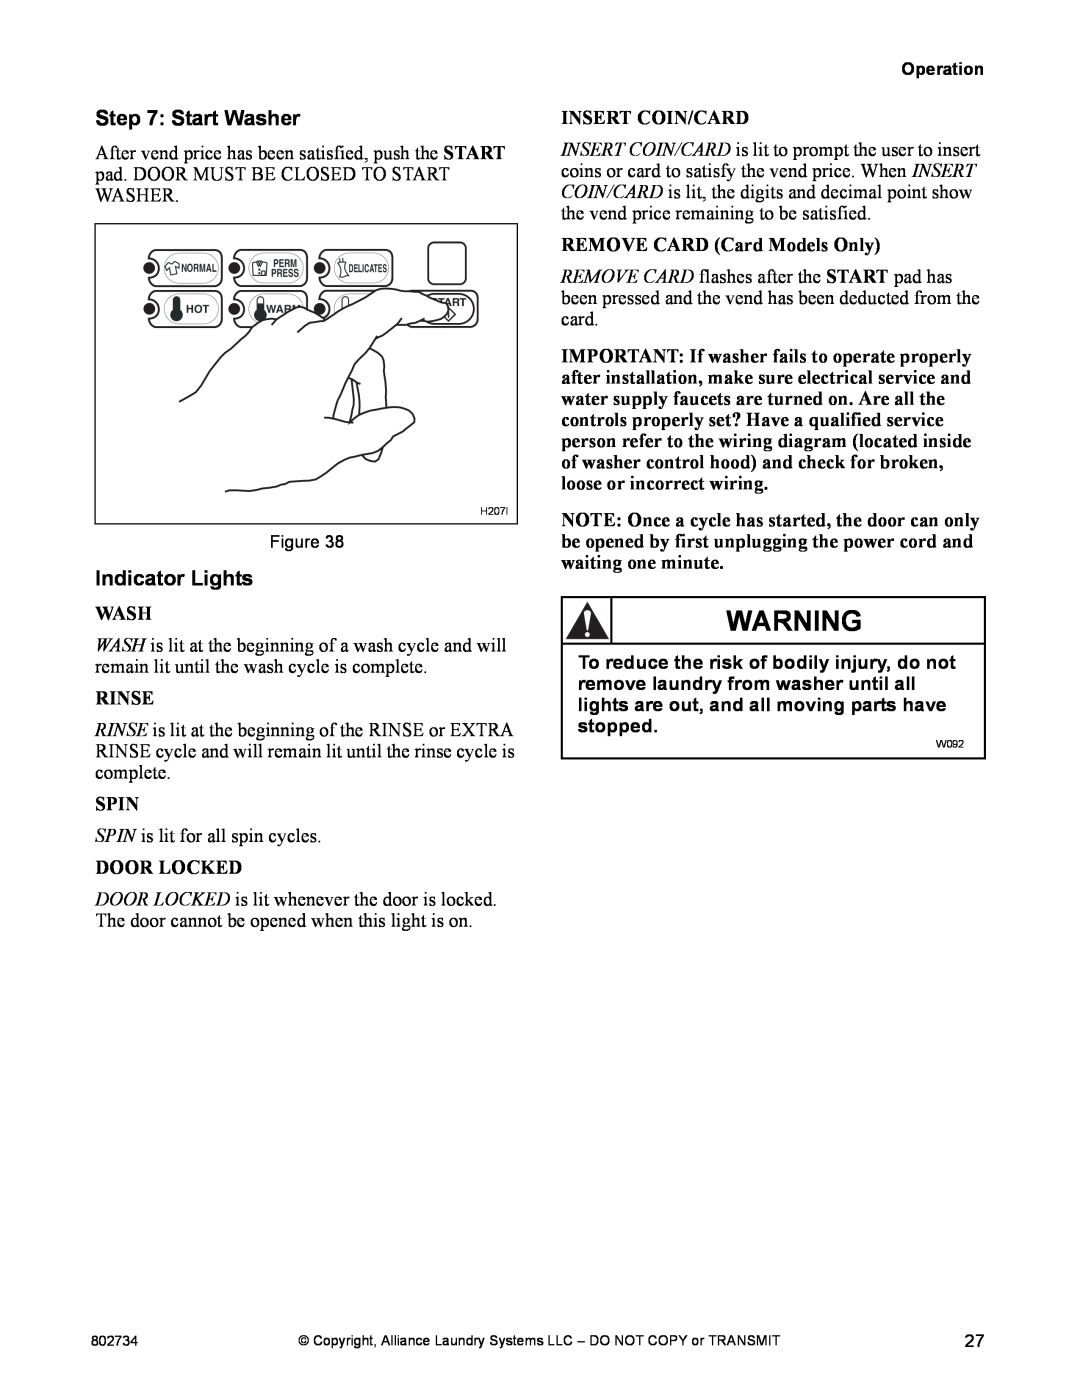 Alliance Laundry Systems FLW1526C manual Start Washer, Indicator Lights 